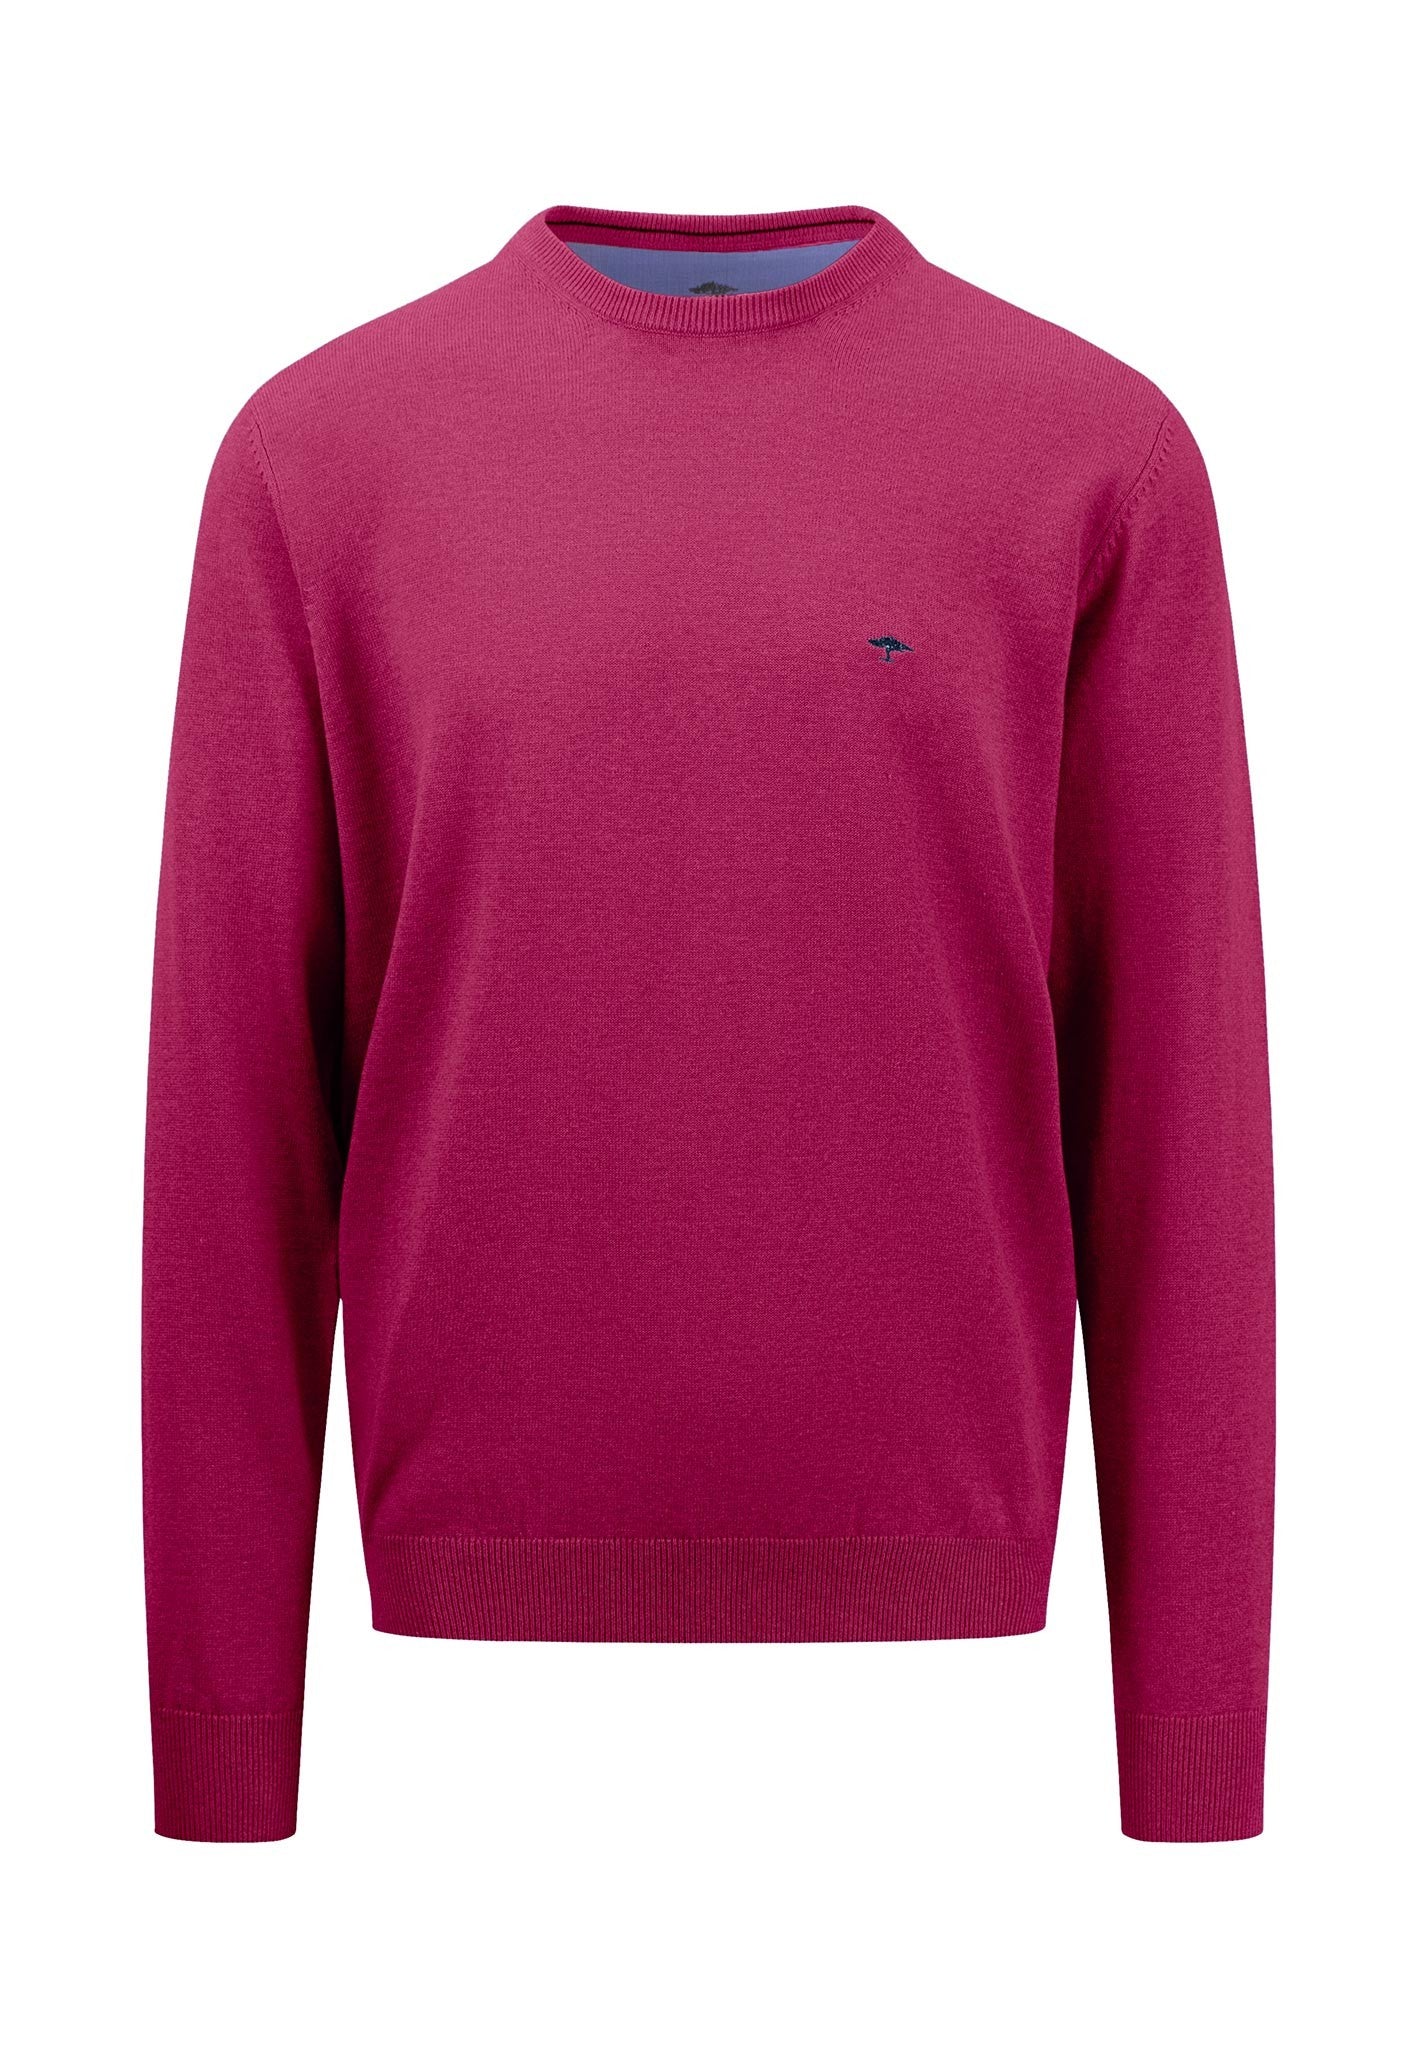 Fynch Hatton Classic Crew Neck Sweater Pink